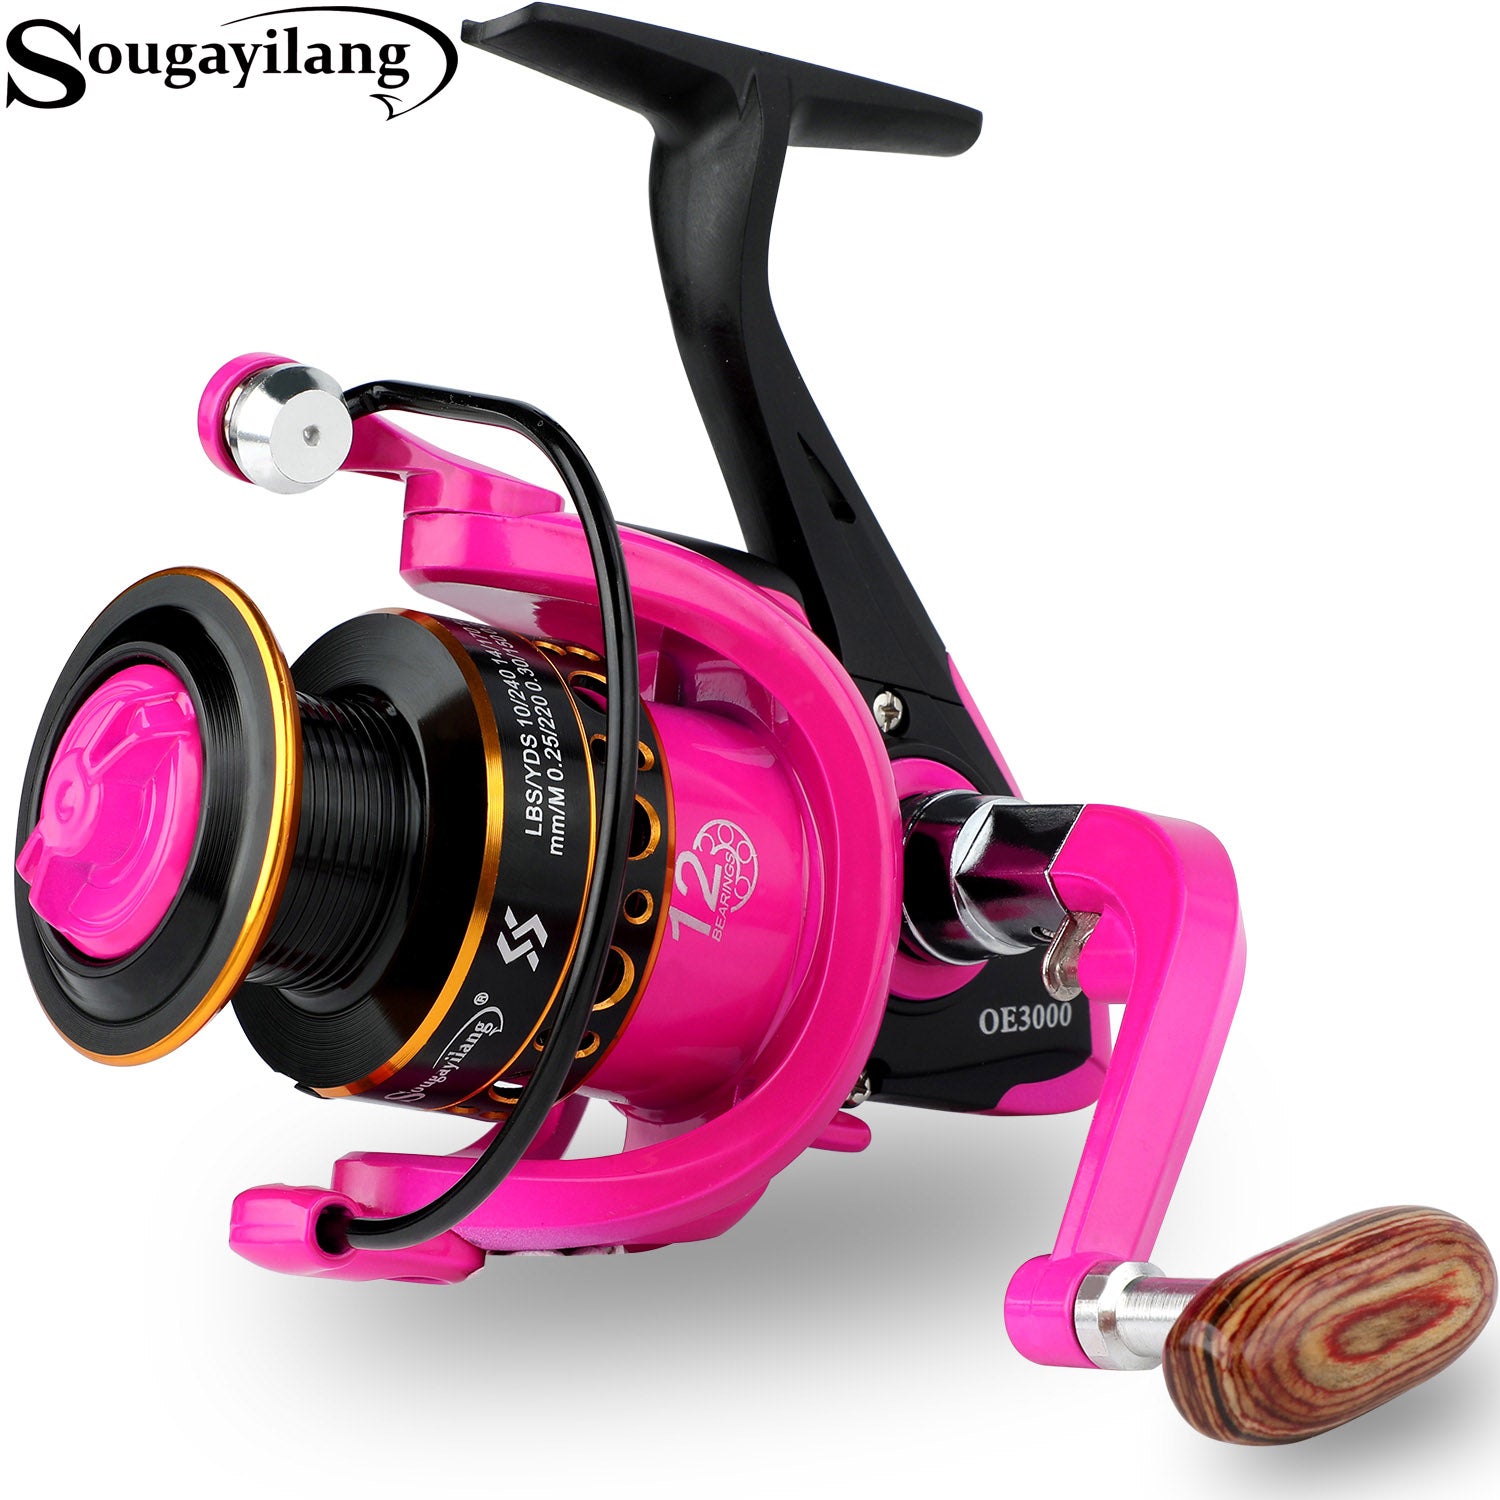 Sougayilang 5.0:1 Spinning Fishing Reel Wooden Handle 1000-3000 Serie